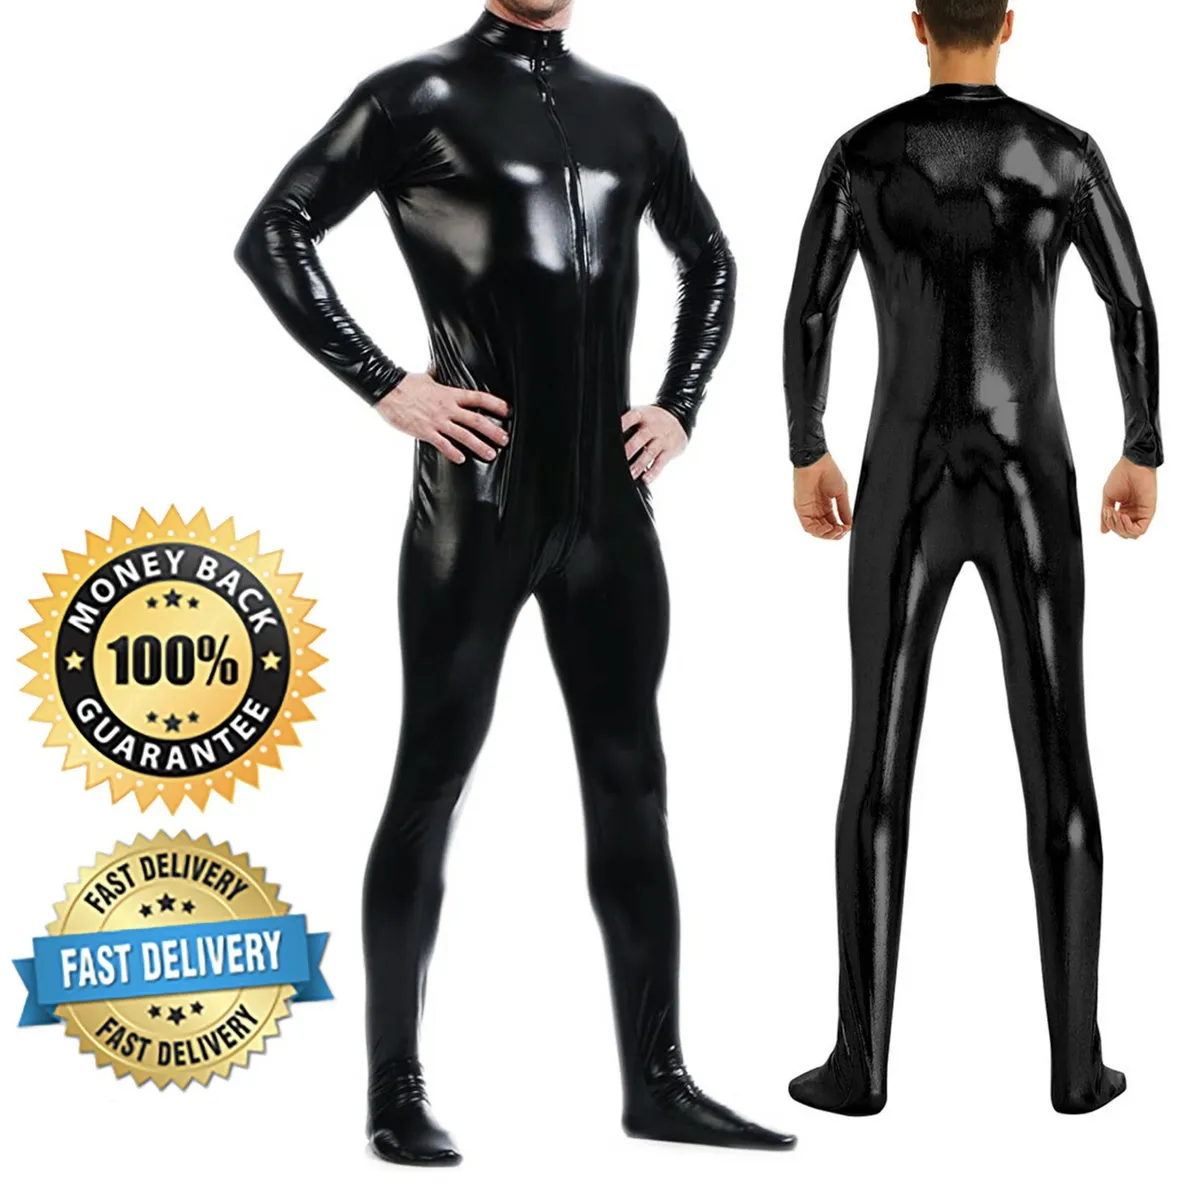 aaron allnutt add latex bodysuits for men photo